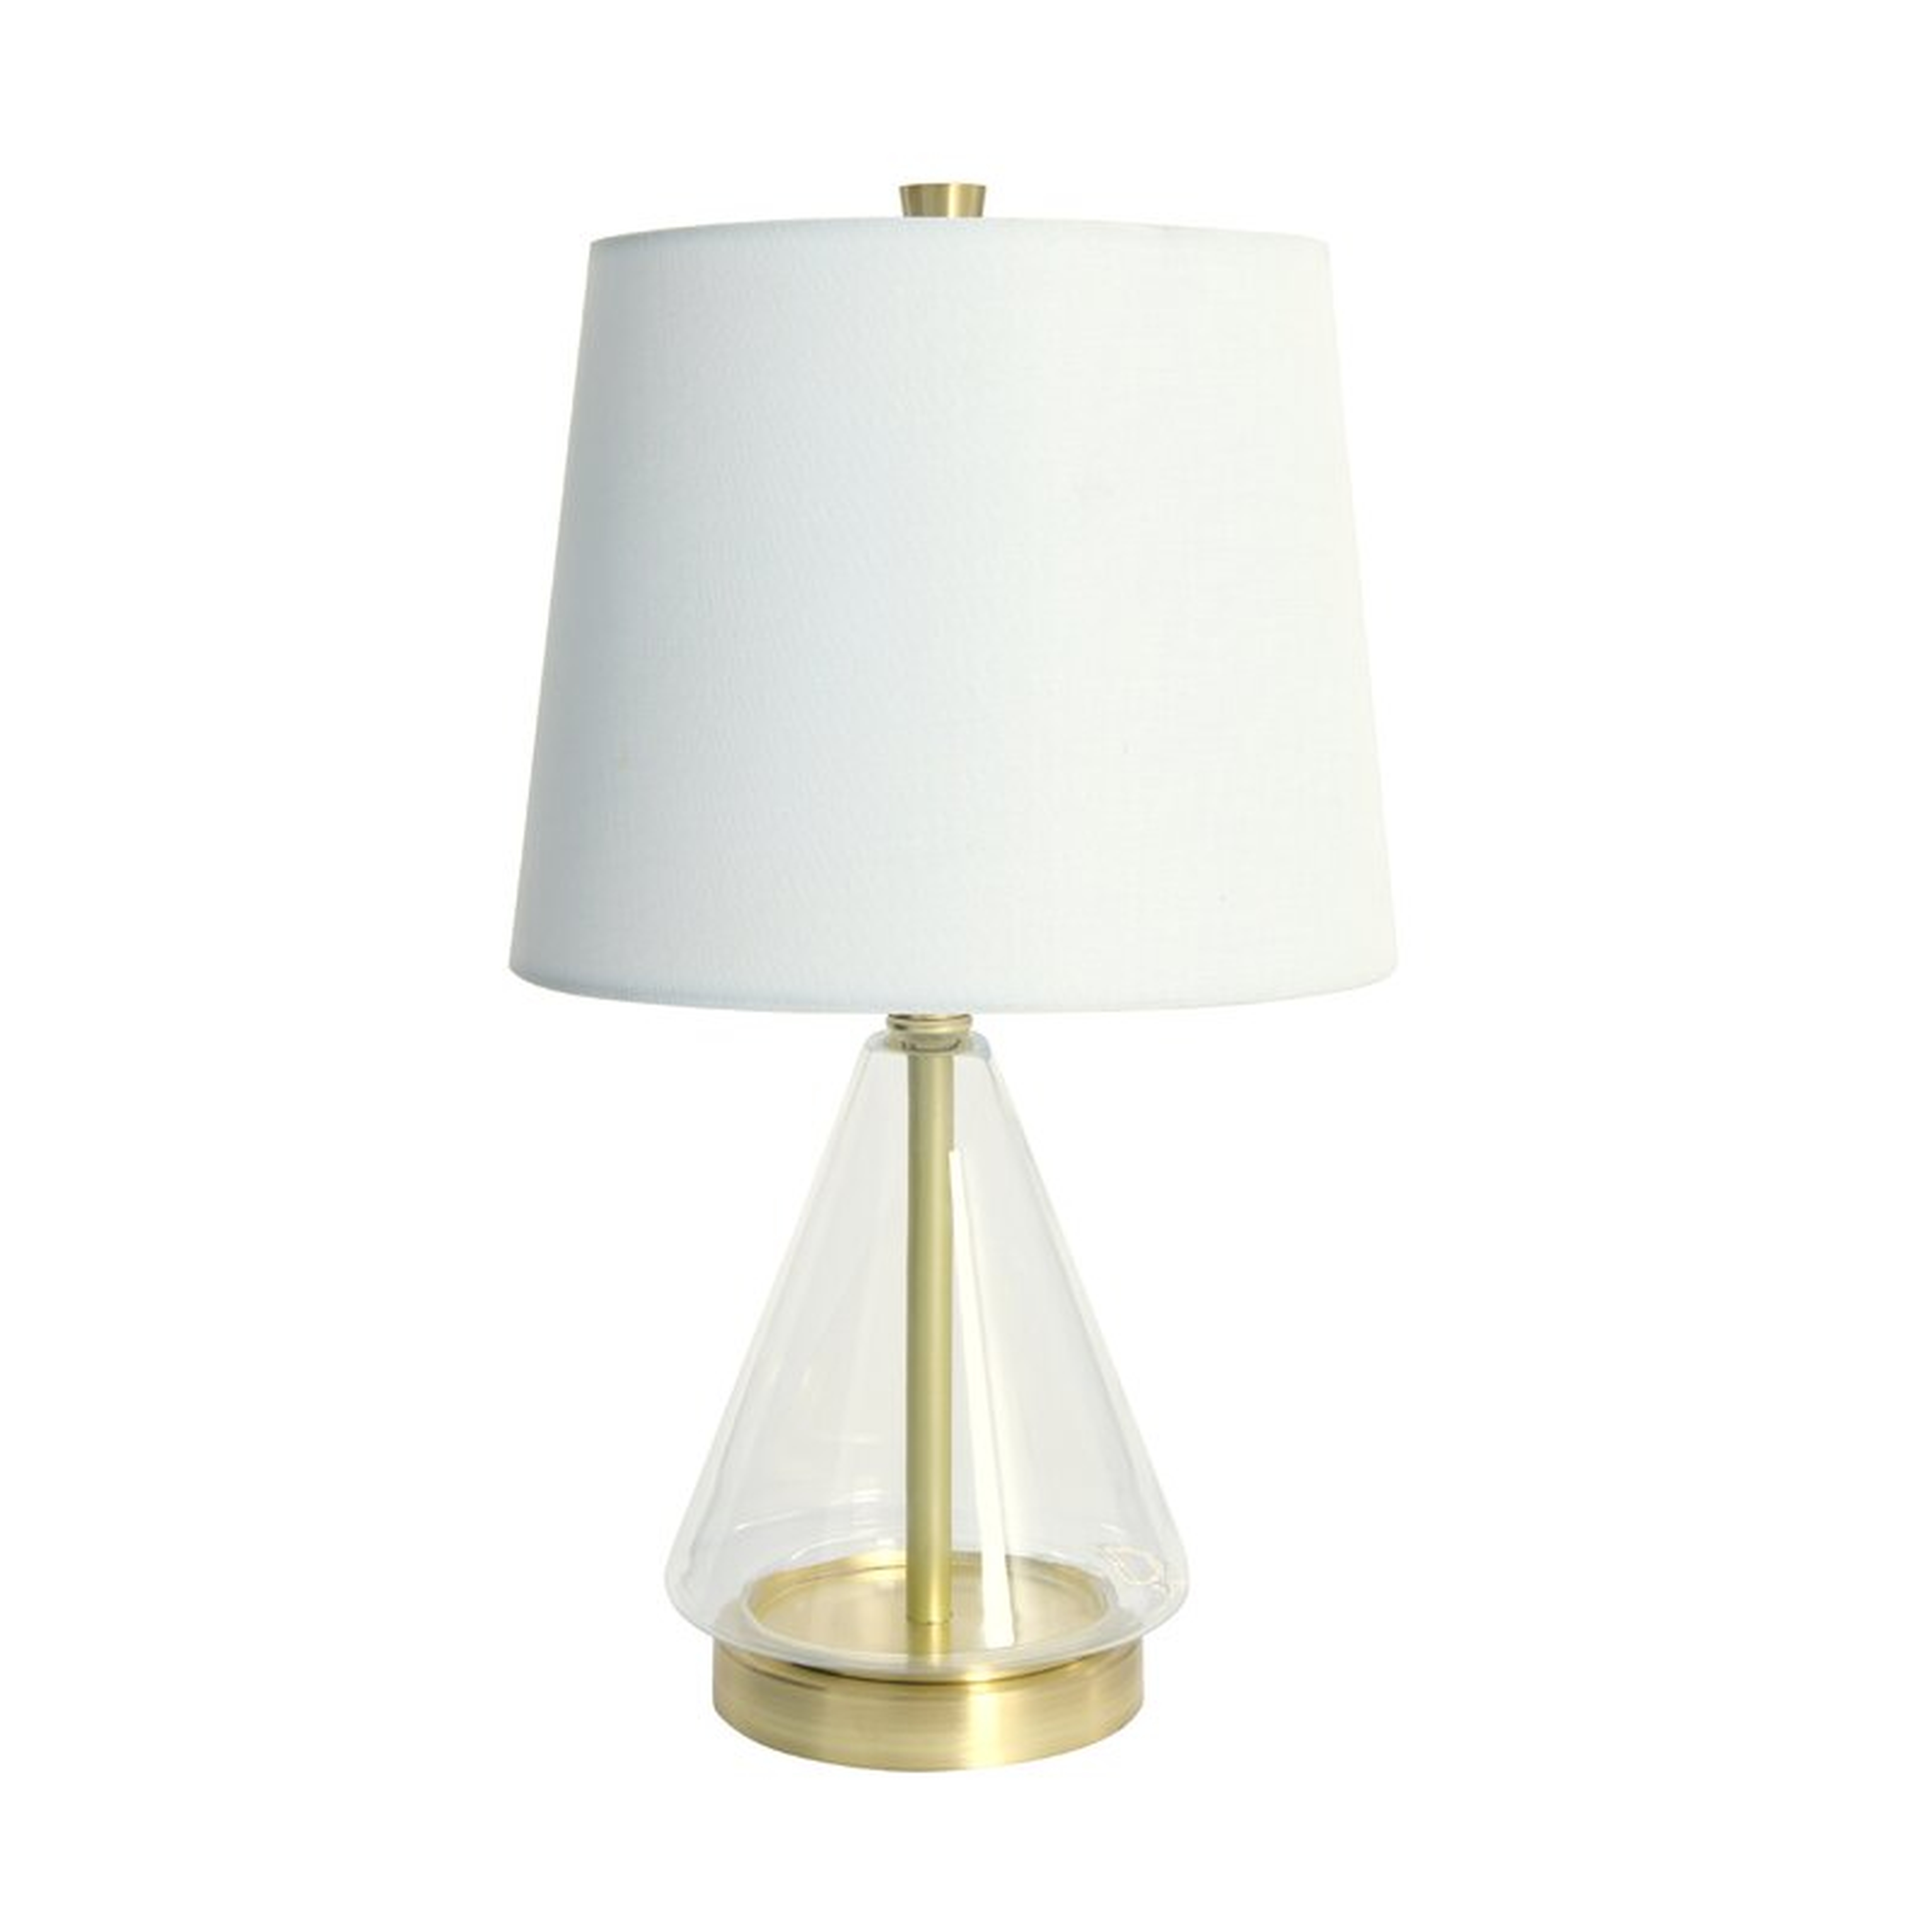 Bickel 19.5" Table lamp - Wayfair